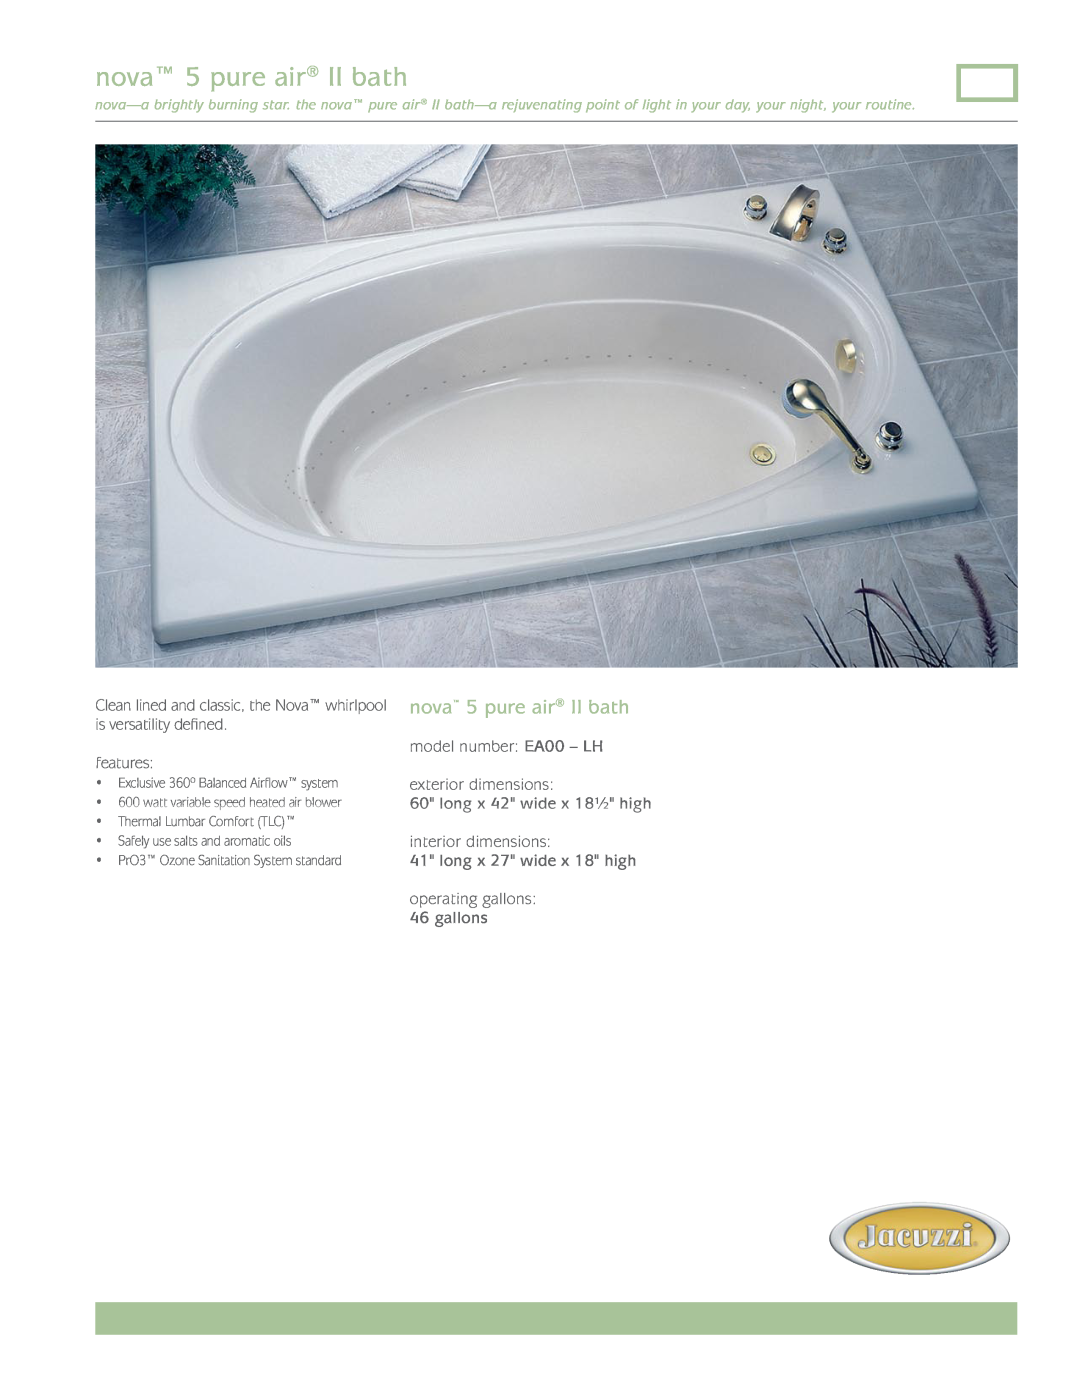 Jacuzzi EA00-LH dimensions nova 5 pure air II bath, is versatility defined, features, model number EA00 - LH, gallons 